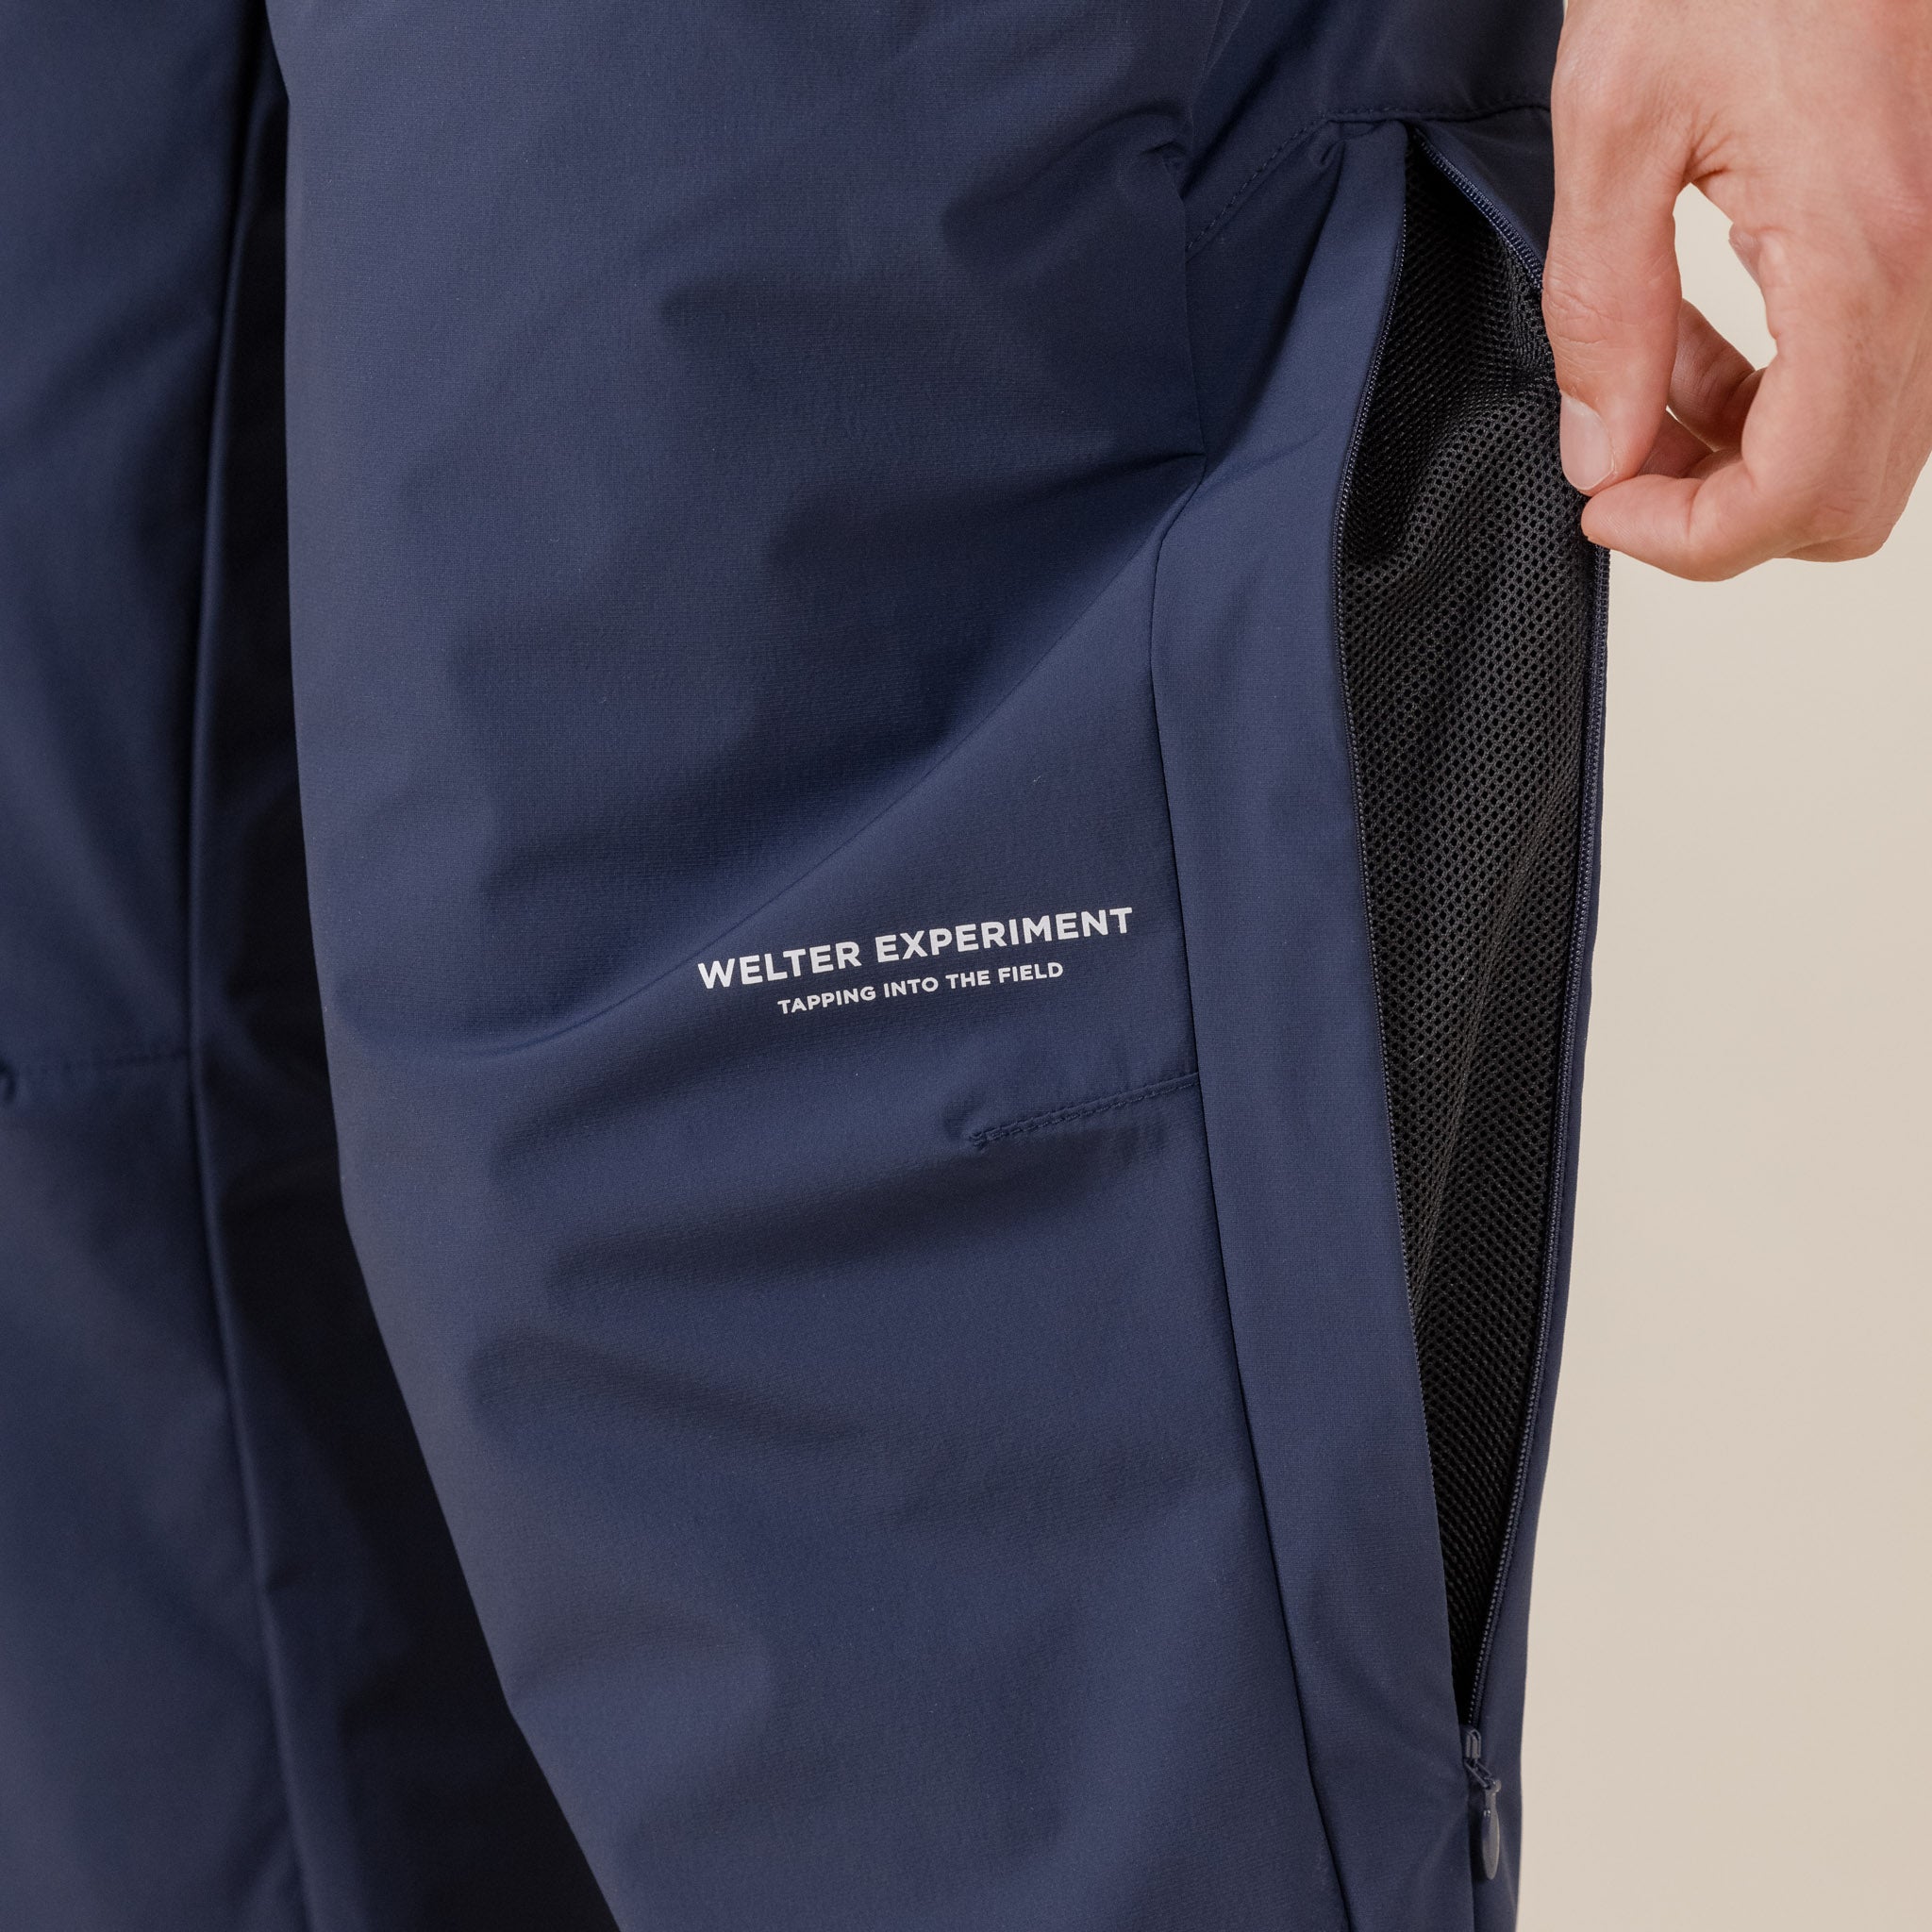 Welter Experiment - Rip Stop Trecking Pants WPL008 - Navy Blue Korean Outdoor Clothing Gorp Gorpcore UK Stockist